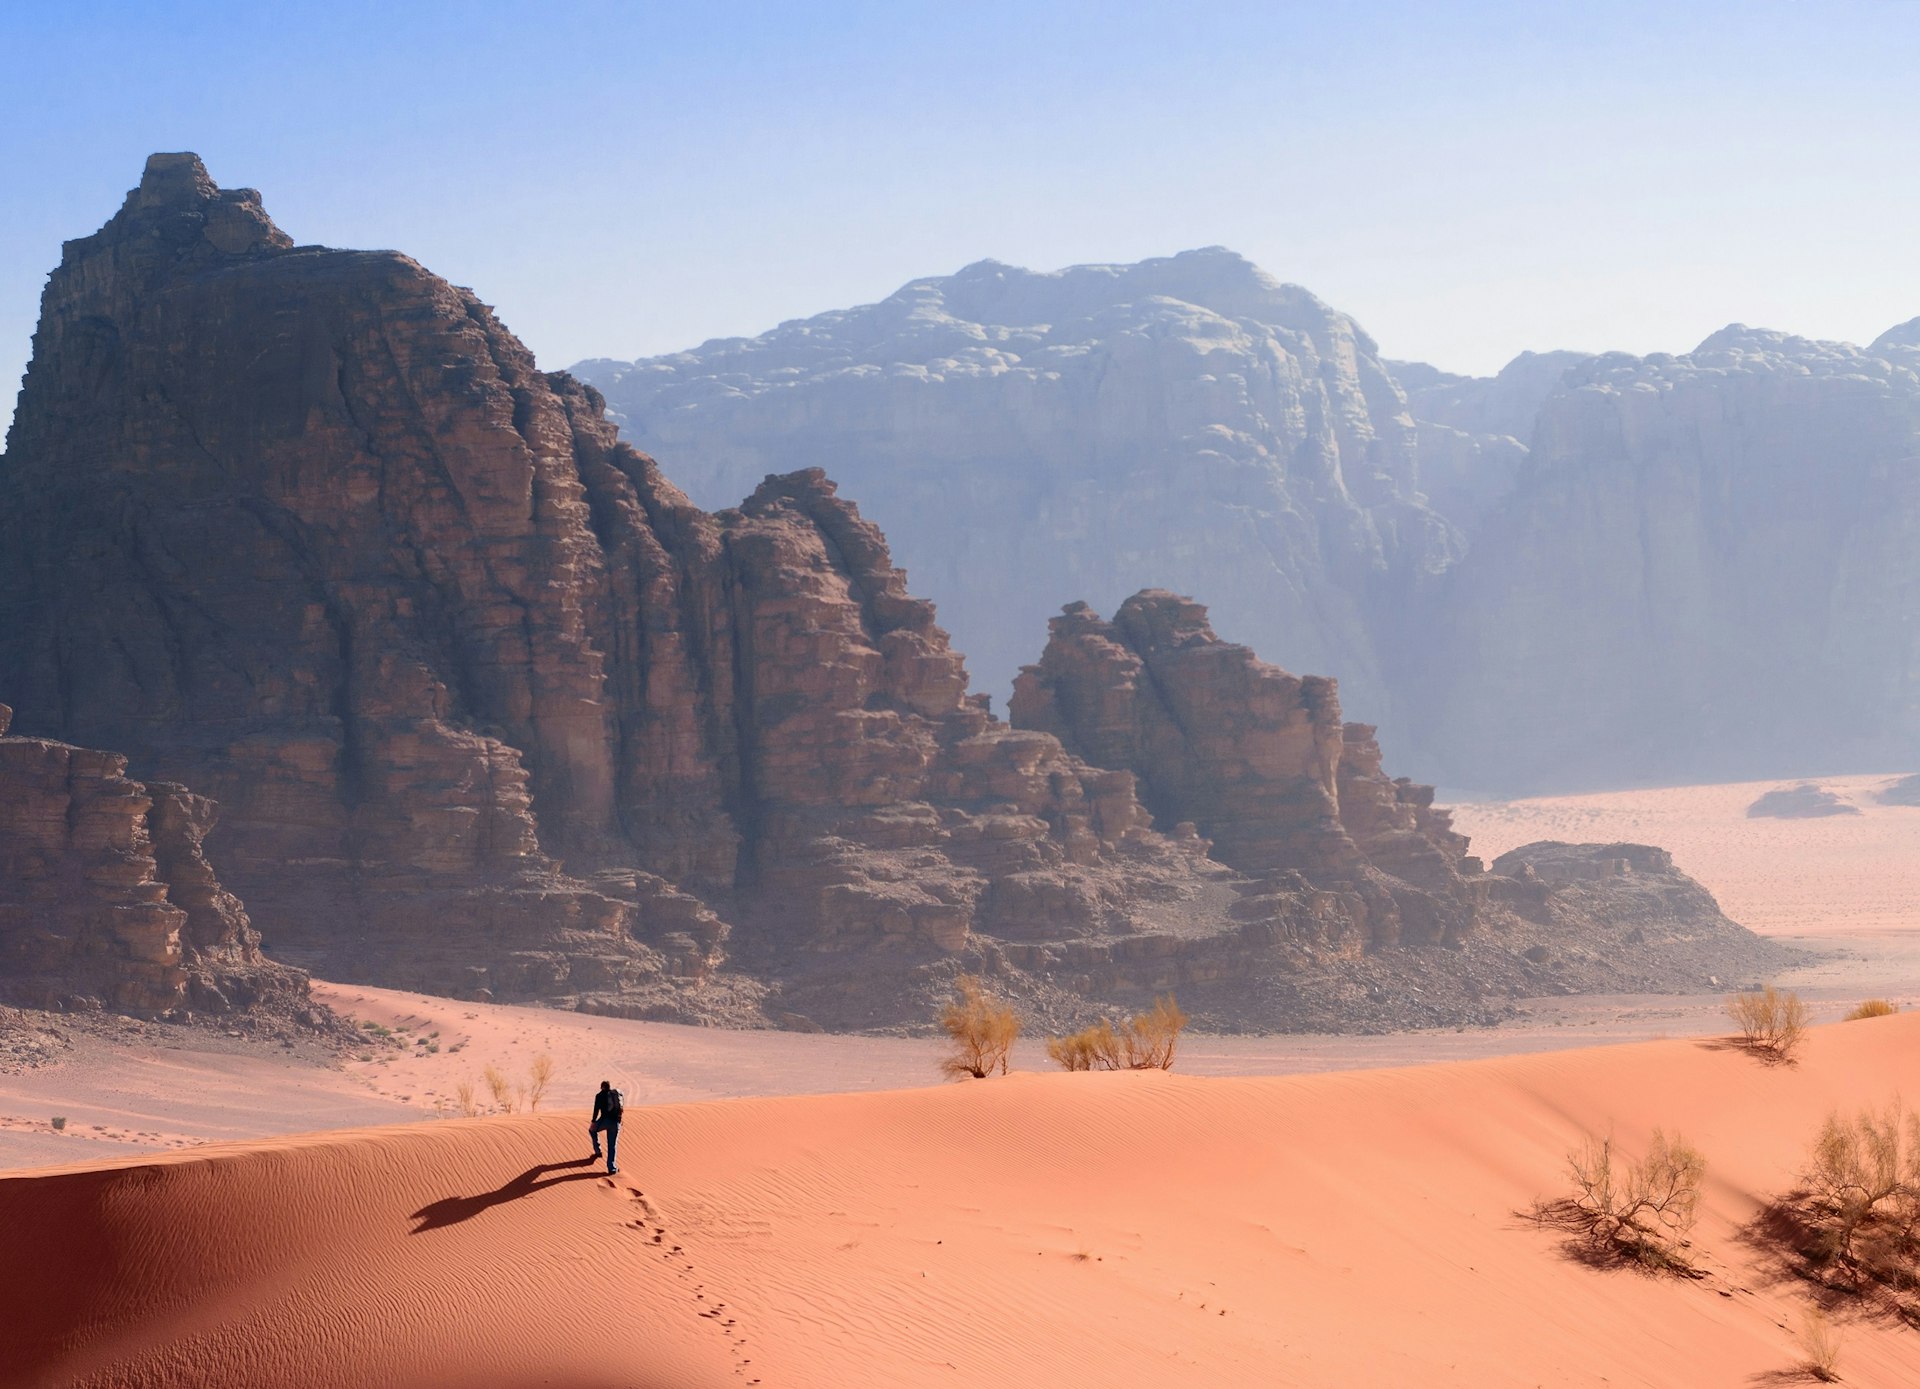 A man walks through the sandy hills and ridges of Wadi Rum